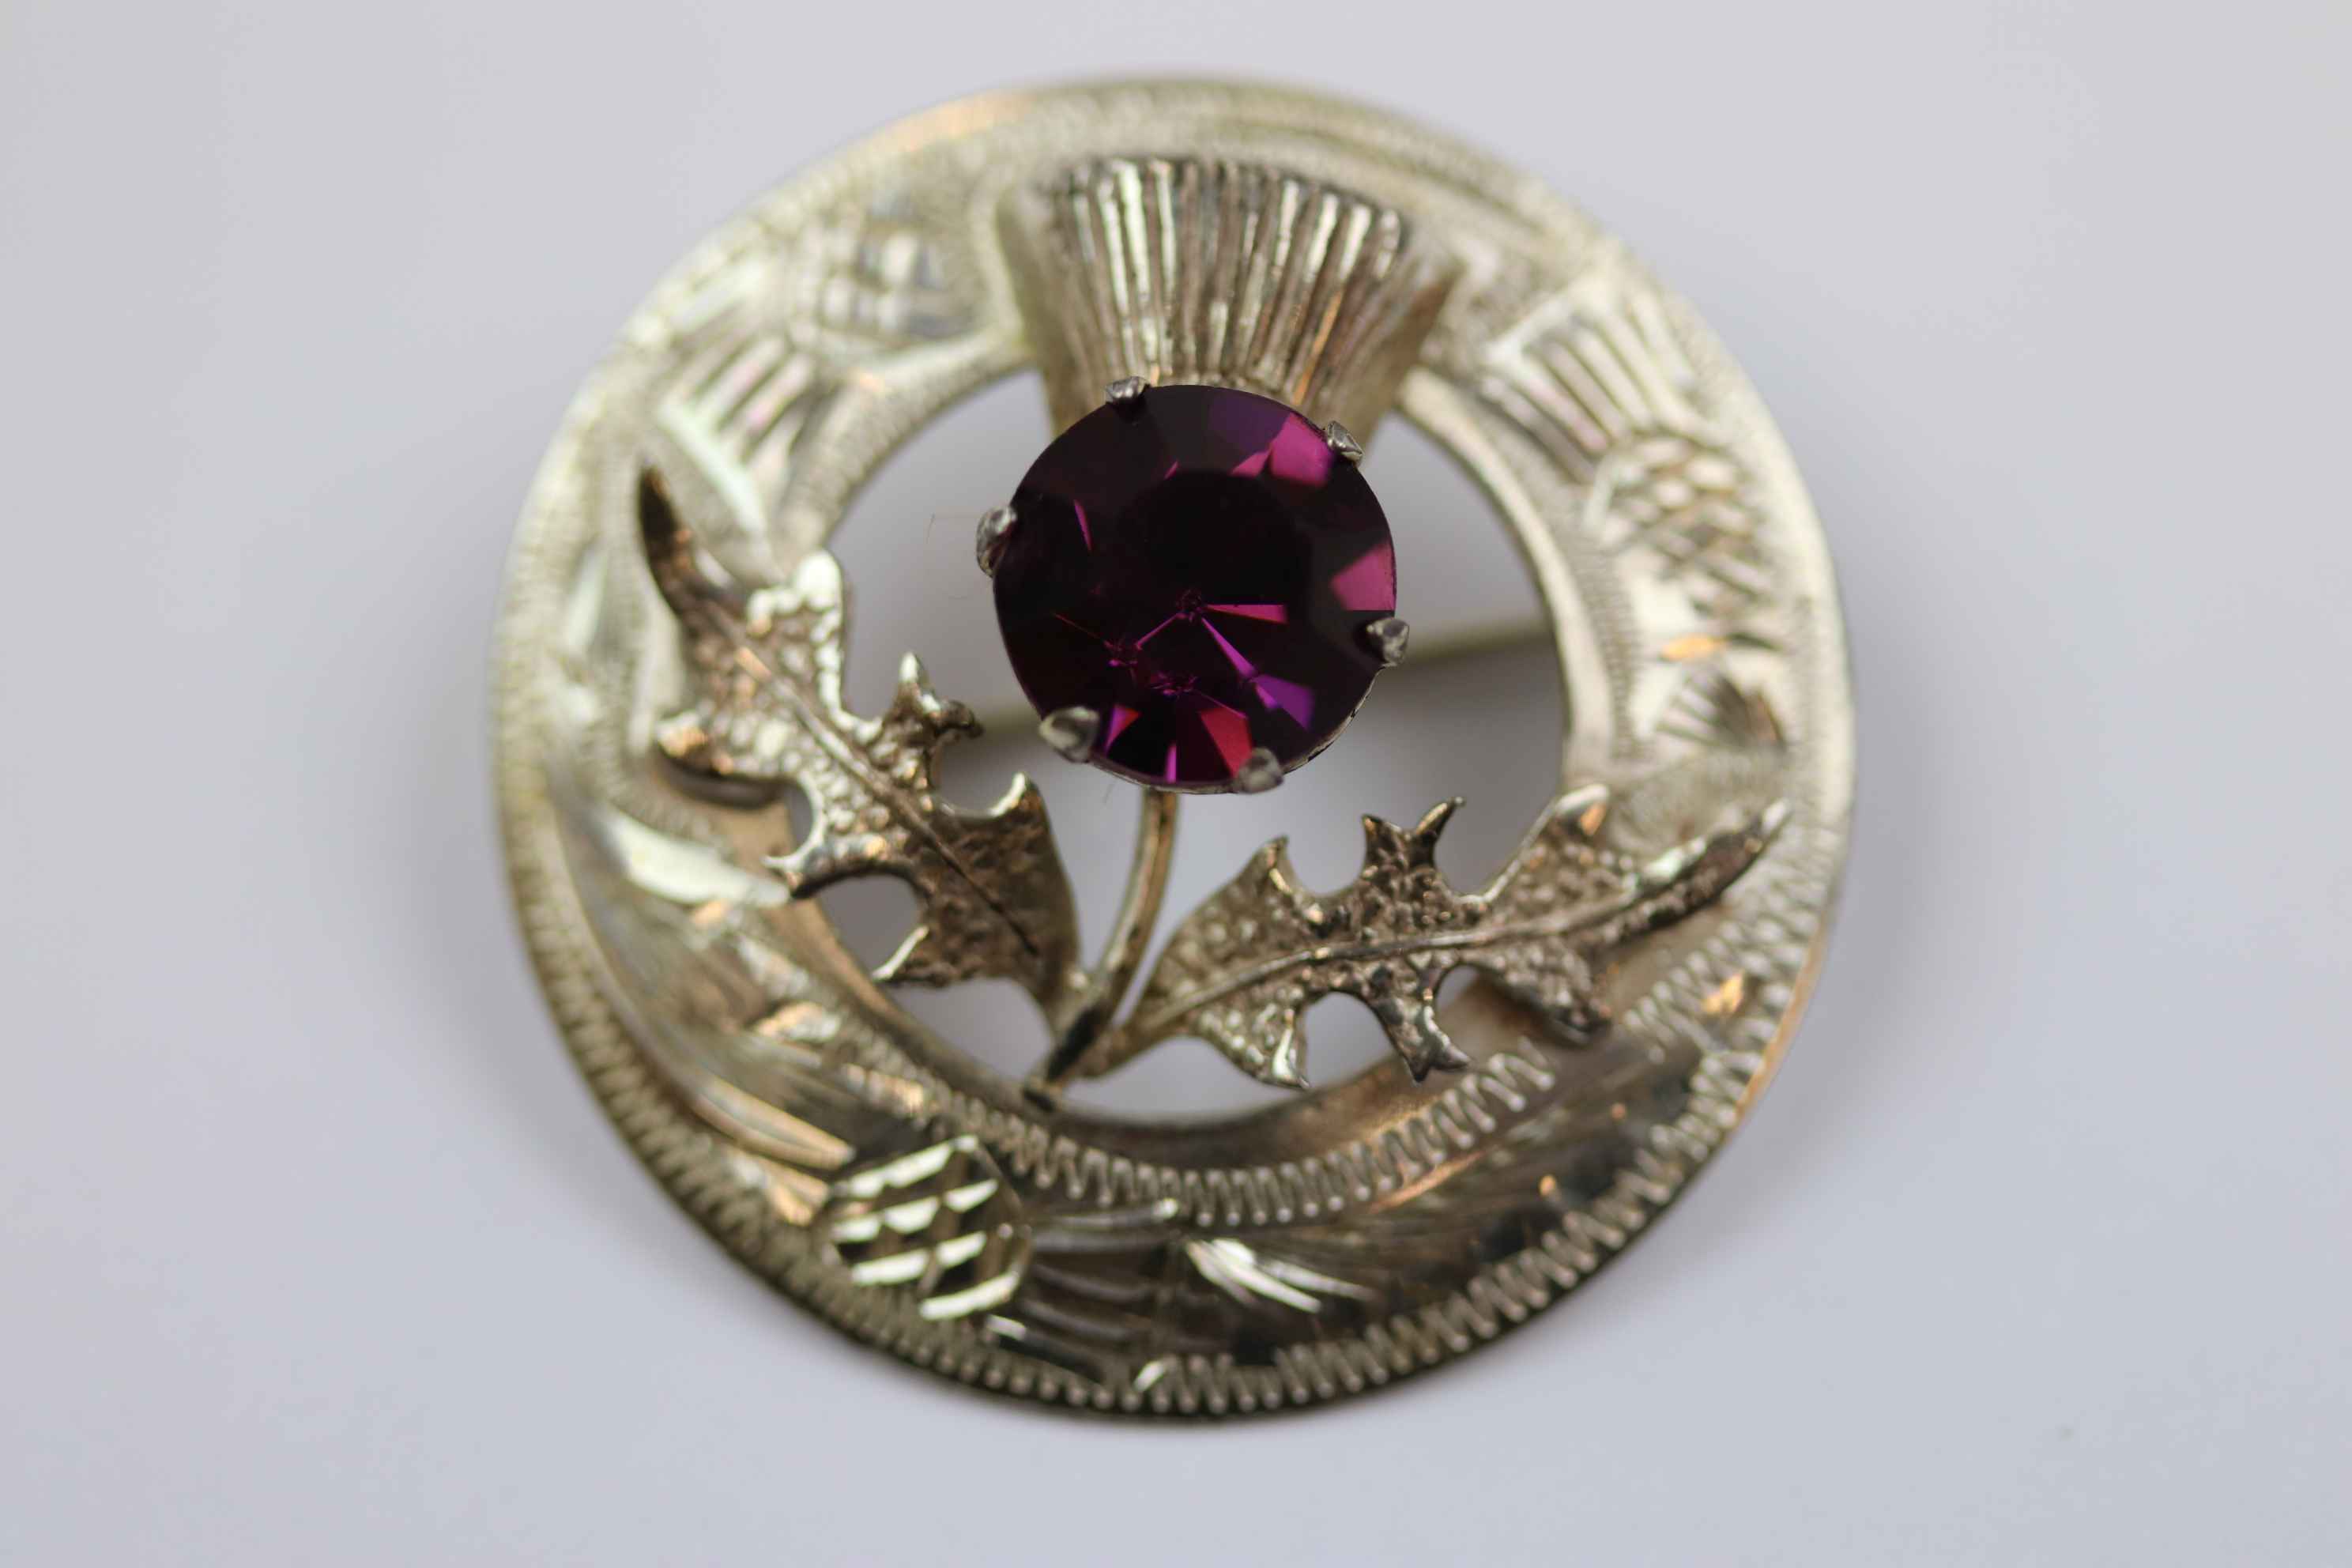 Mid twentieth century Scottish silver paste set thistle brooch, purple paste stone forming the